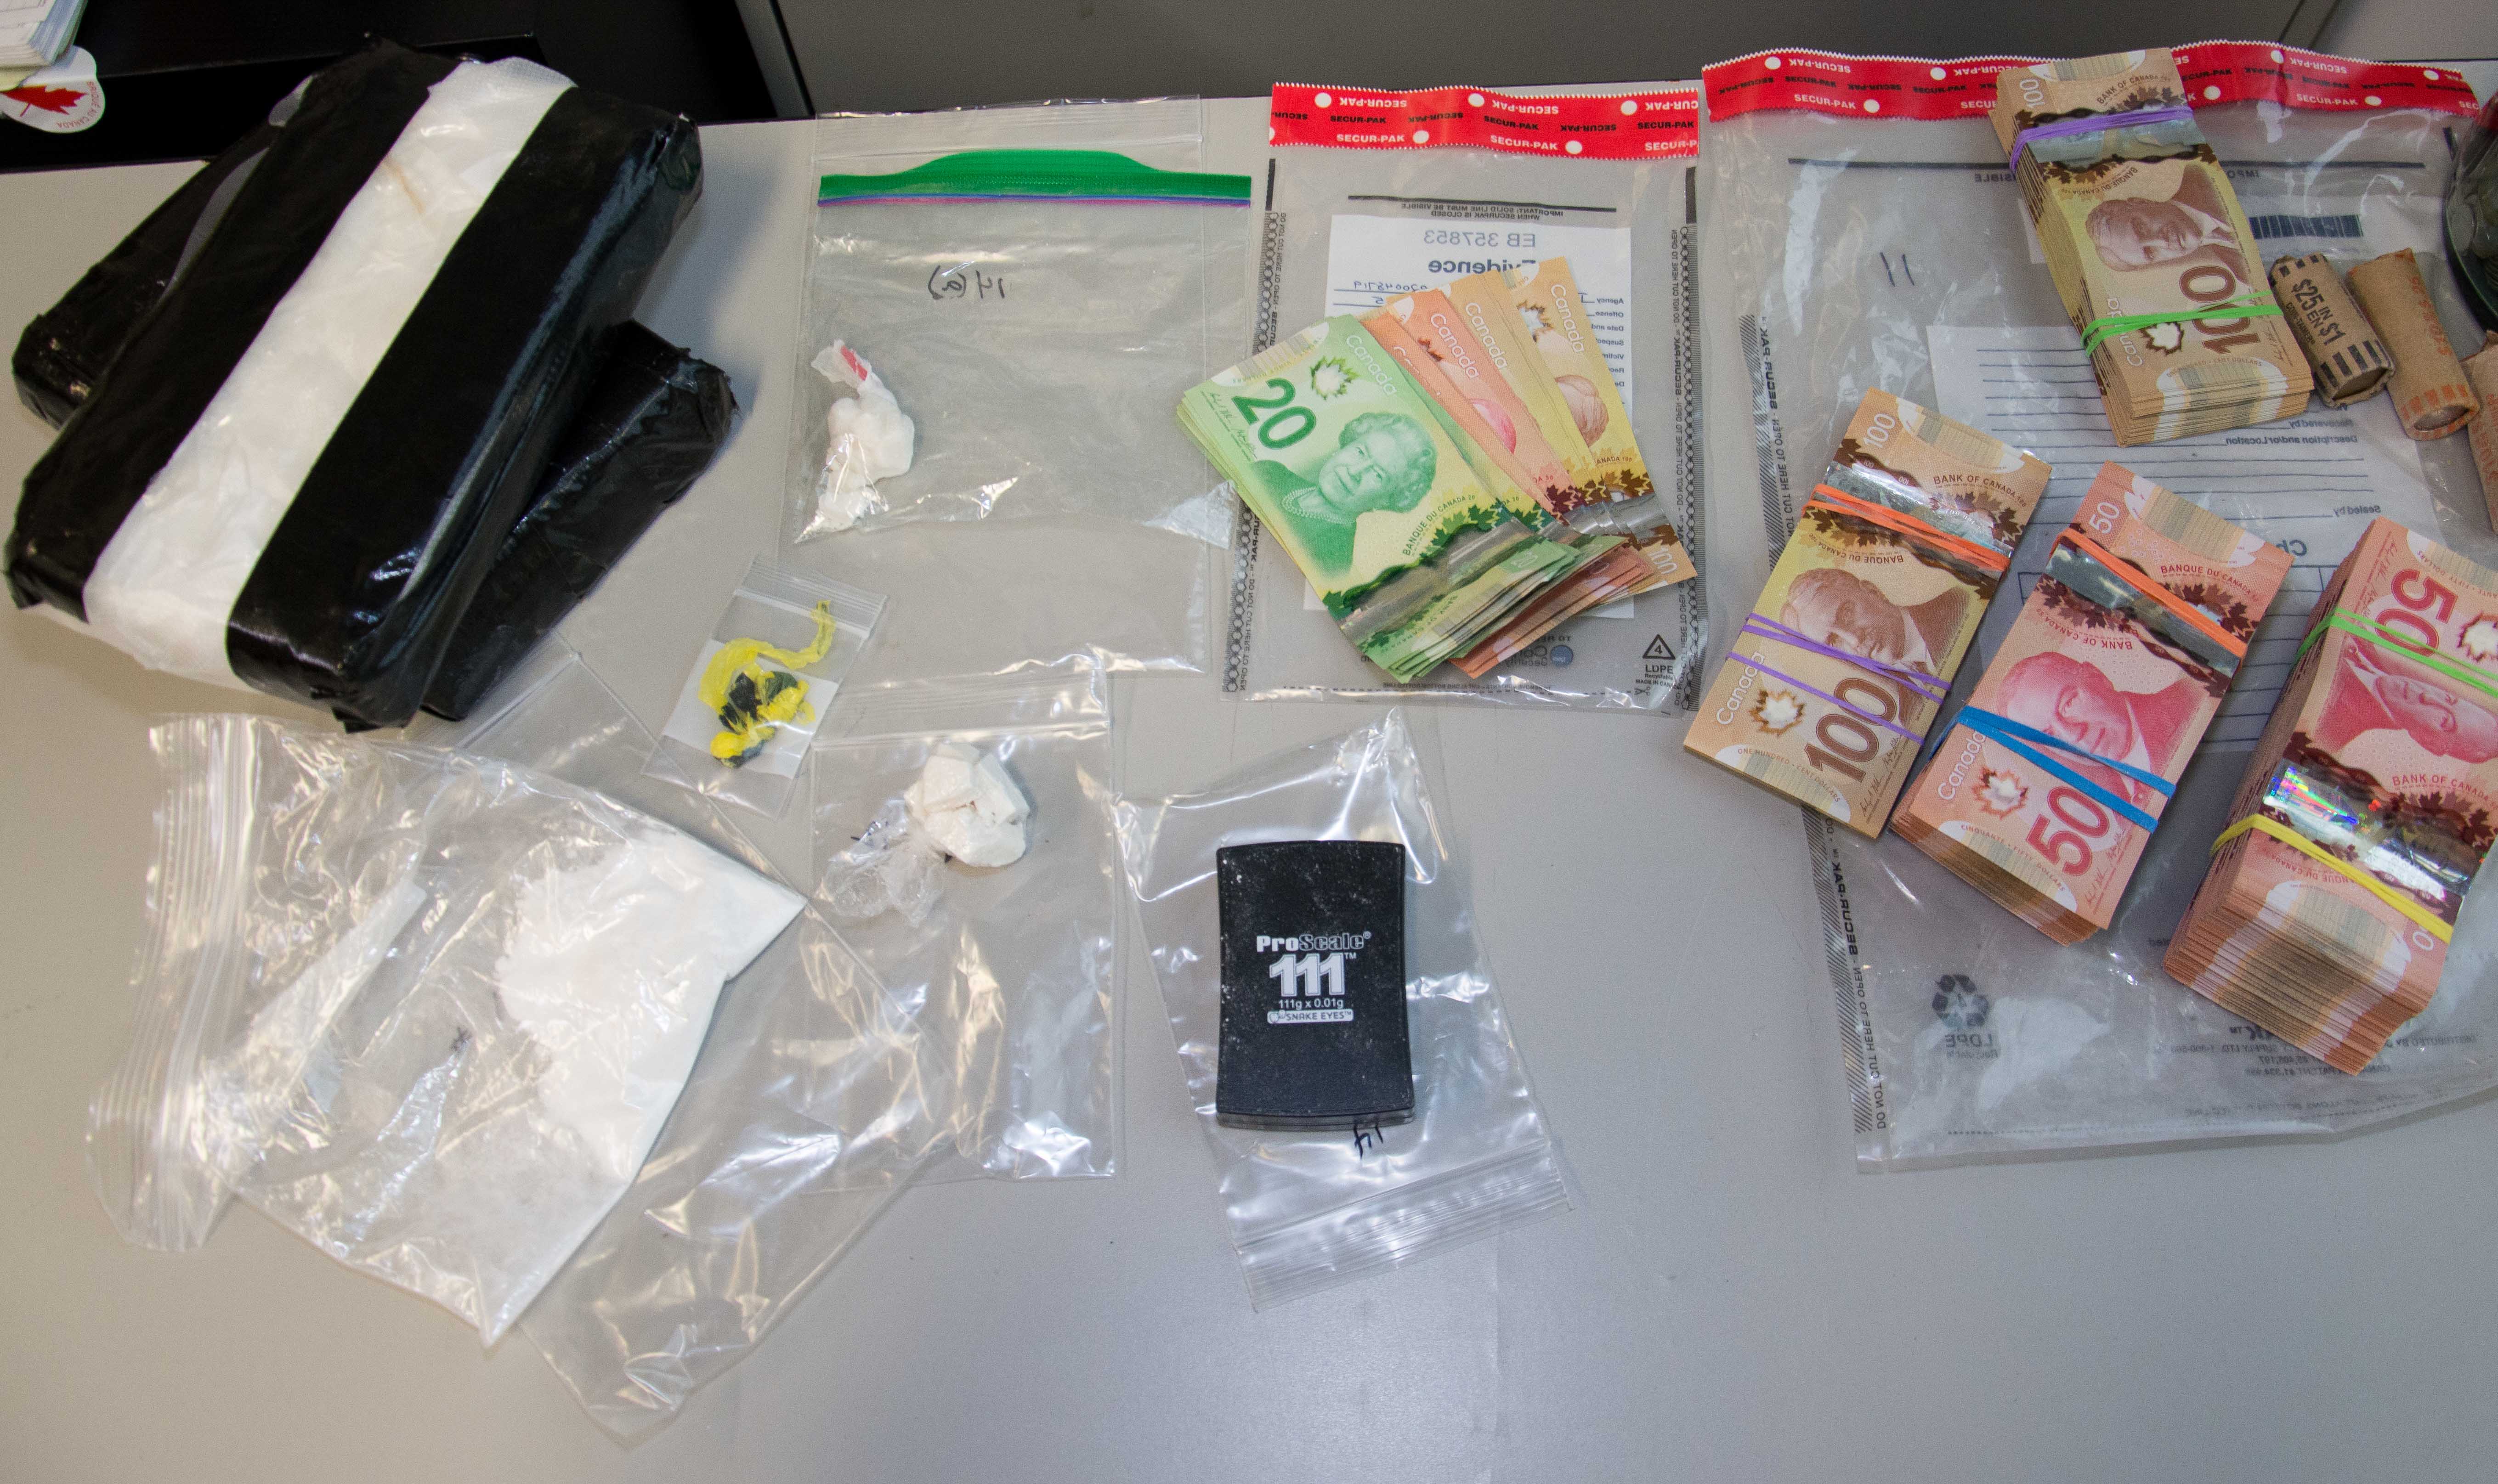 Police seize cocaine, cash amid drug investigation